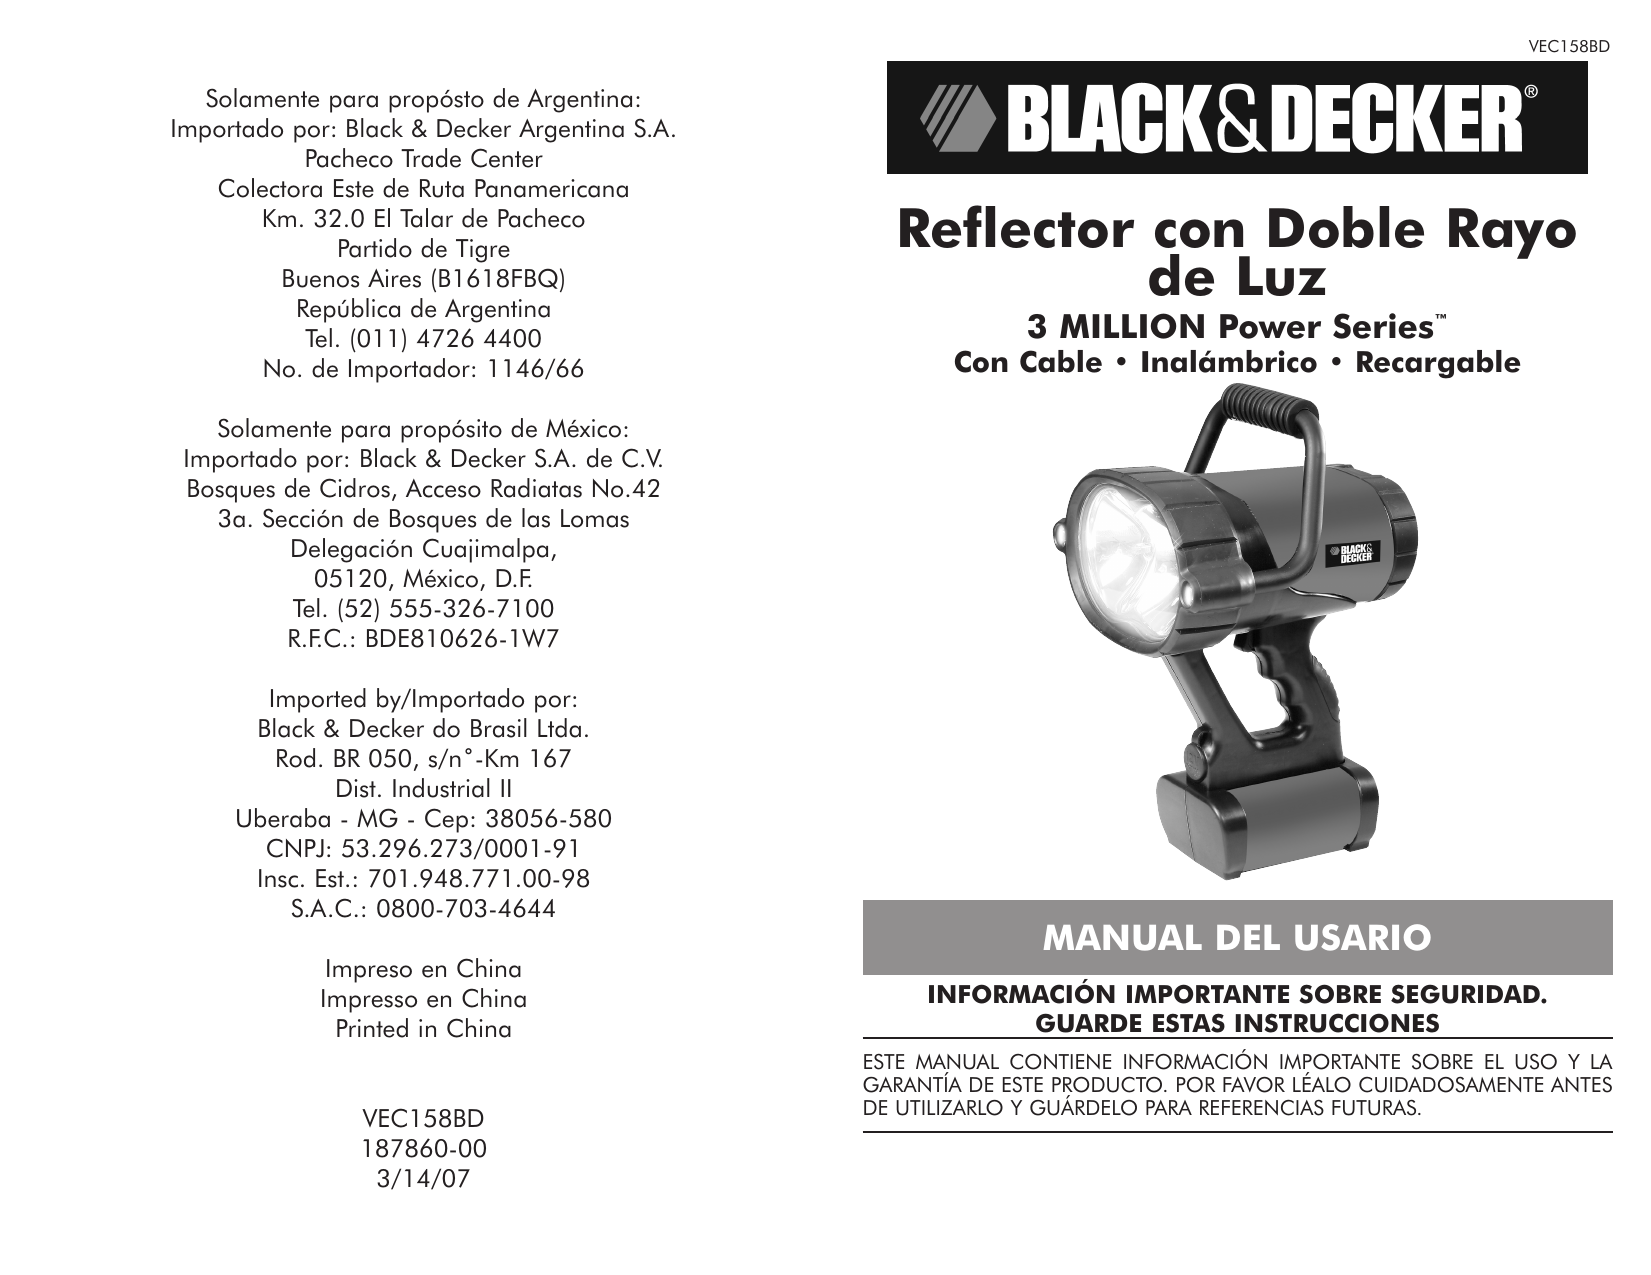 Black Decker Power Series V 2 Million User Manual Manualzz